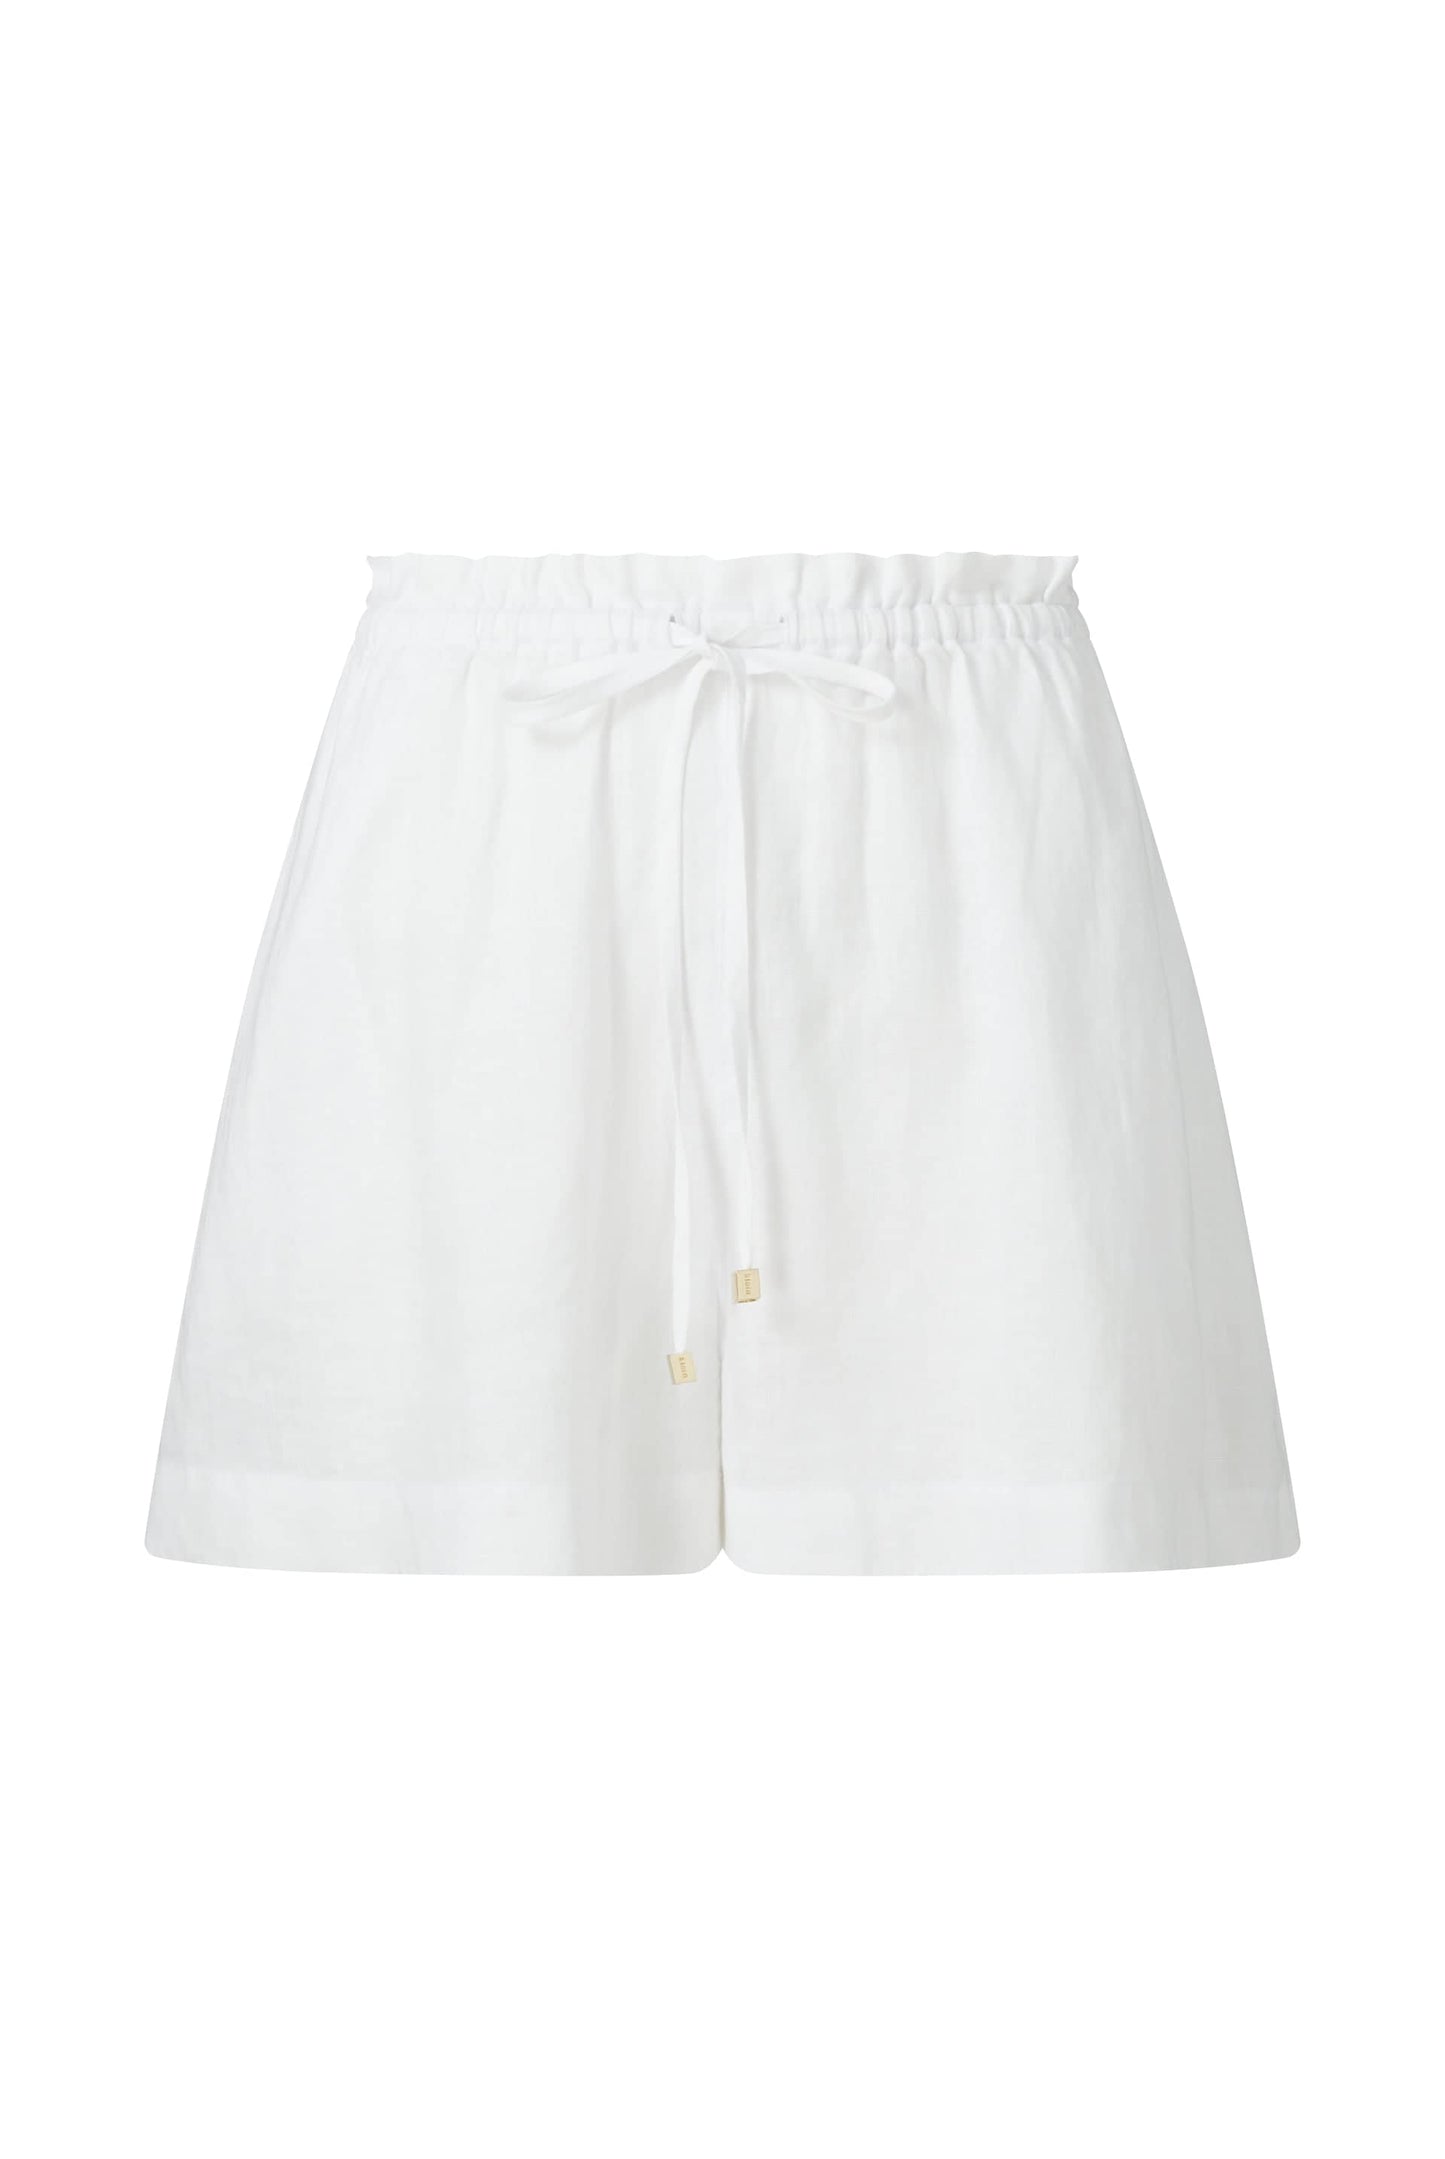 White Bay Linen Drawstring Shorts